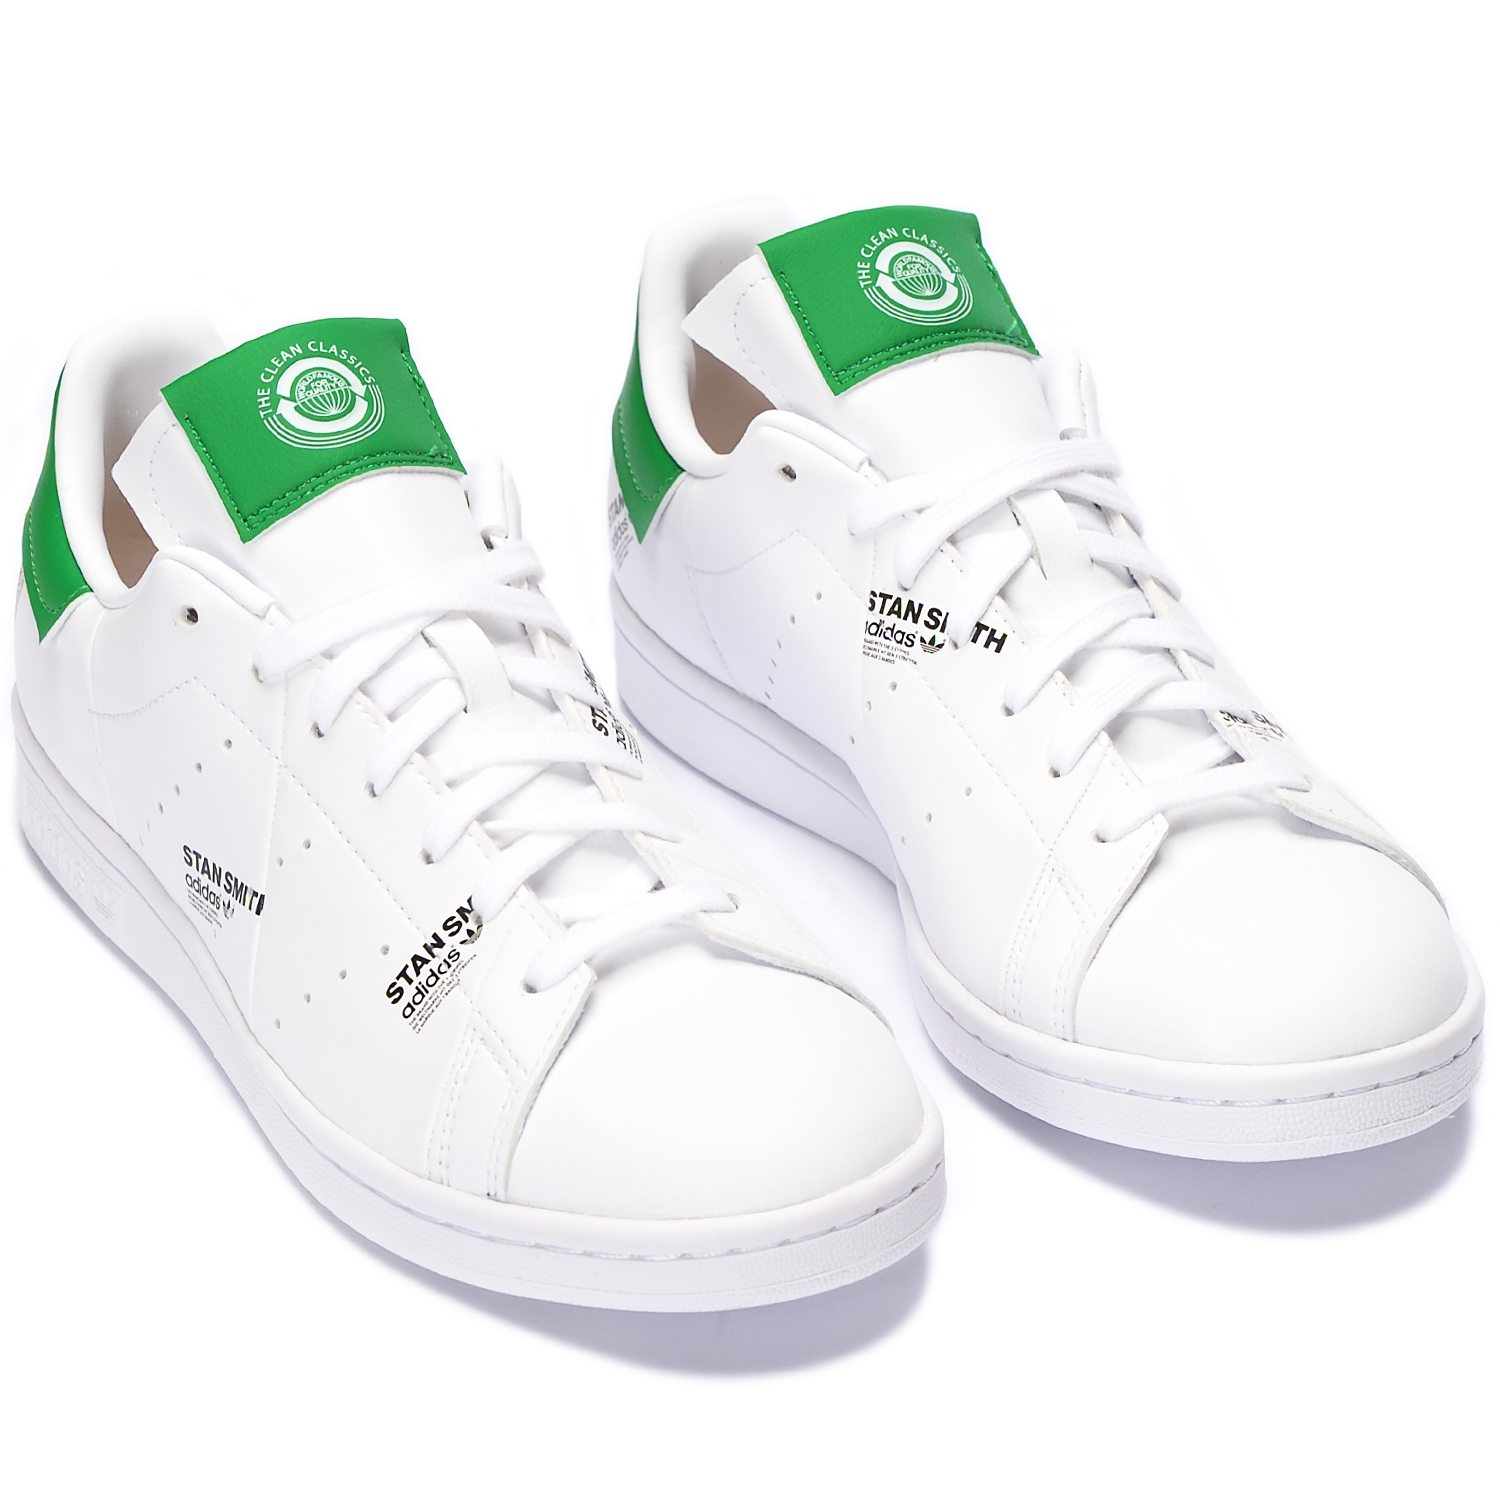 adidas Originals Stan Smith Cloud White / Green / Core Black